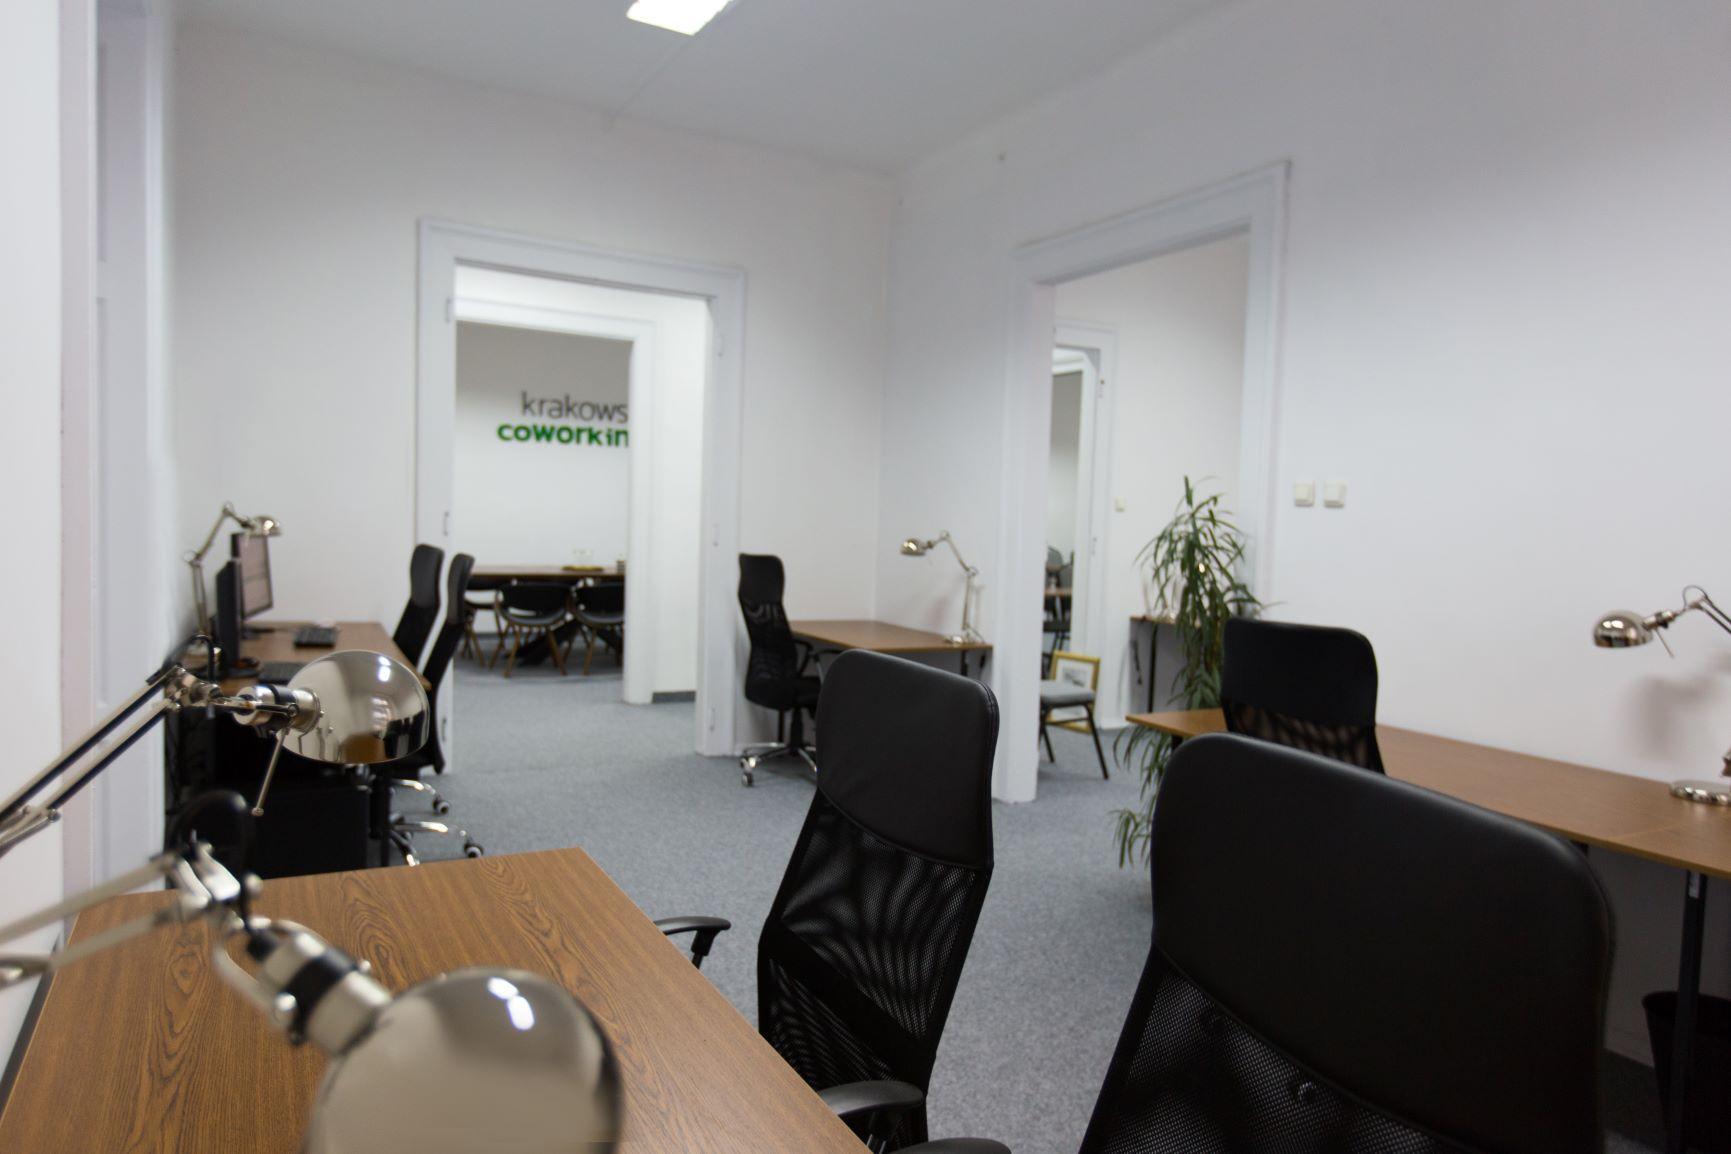 Büro für 7 Pers. in Krakowski Coworking